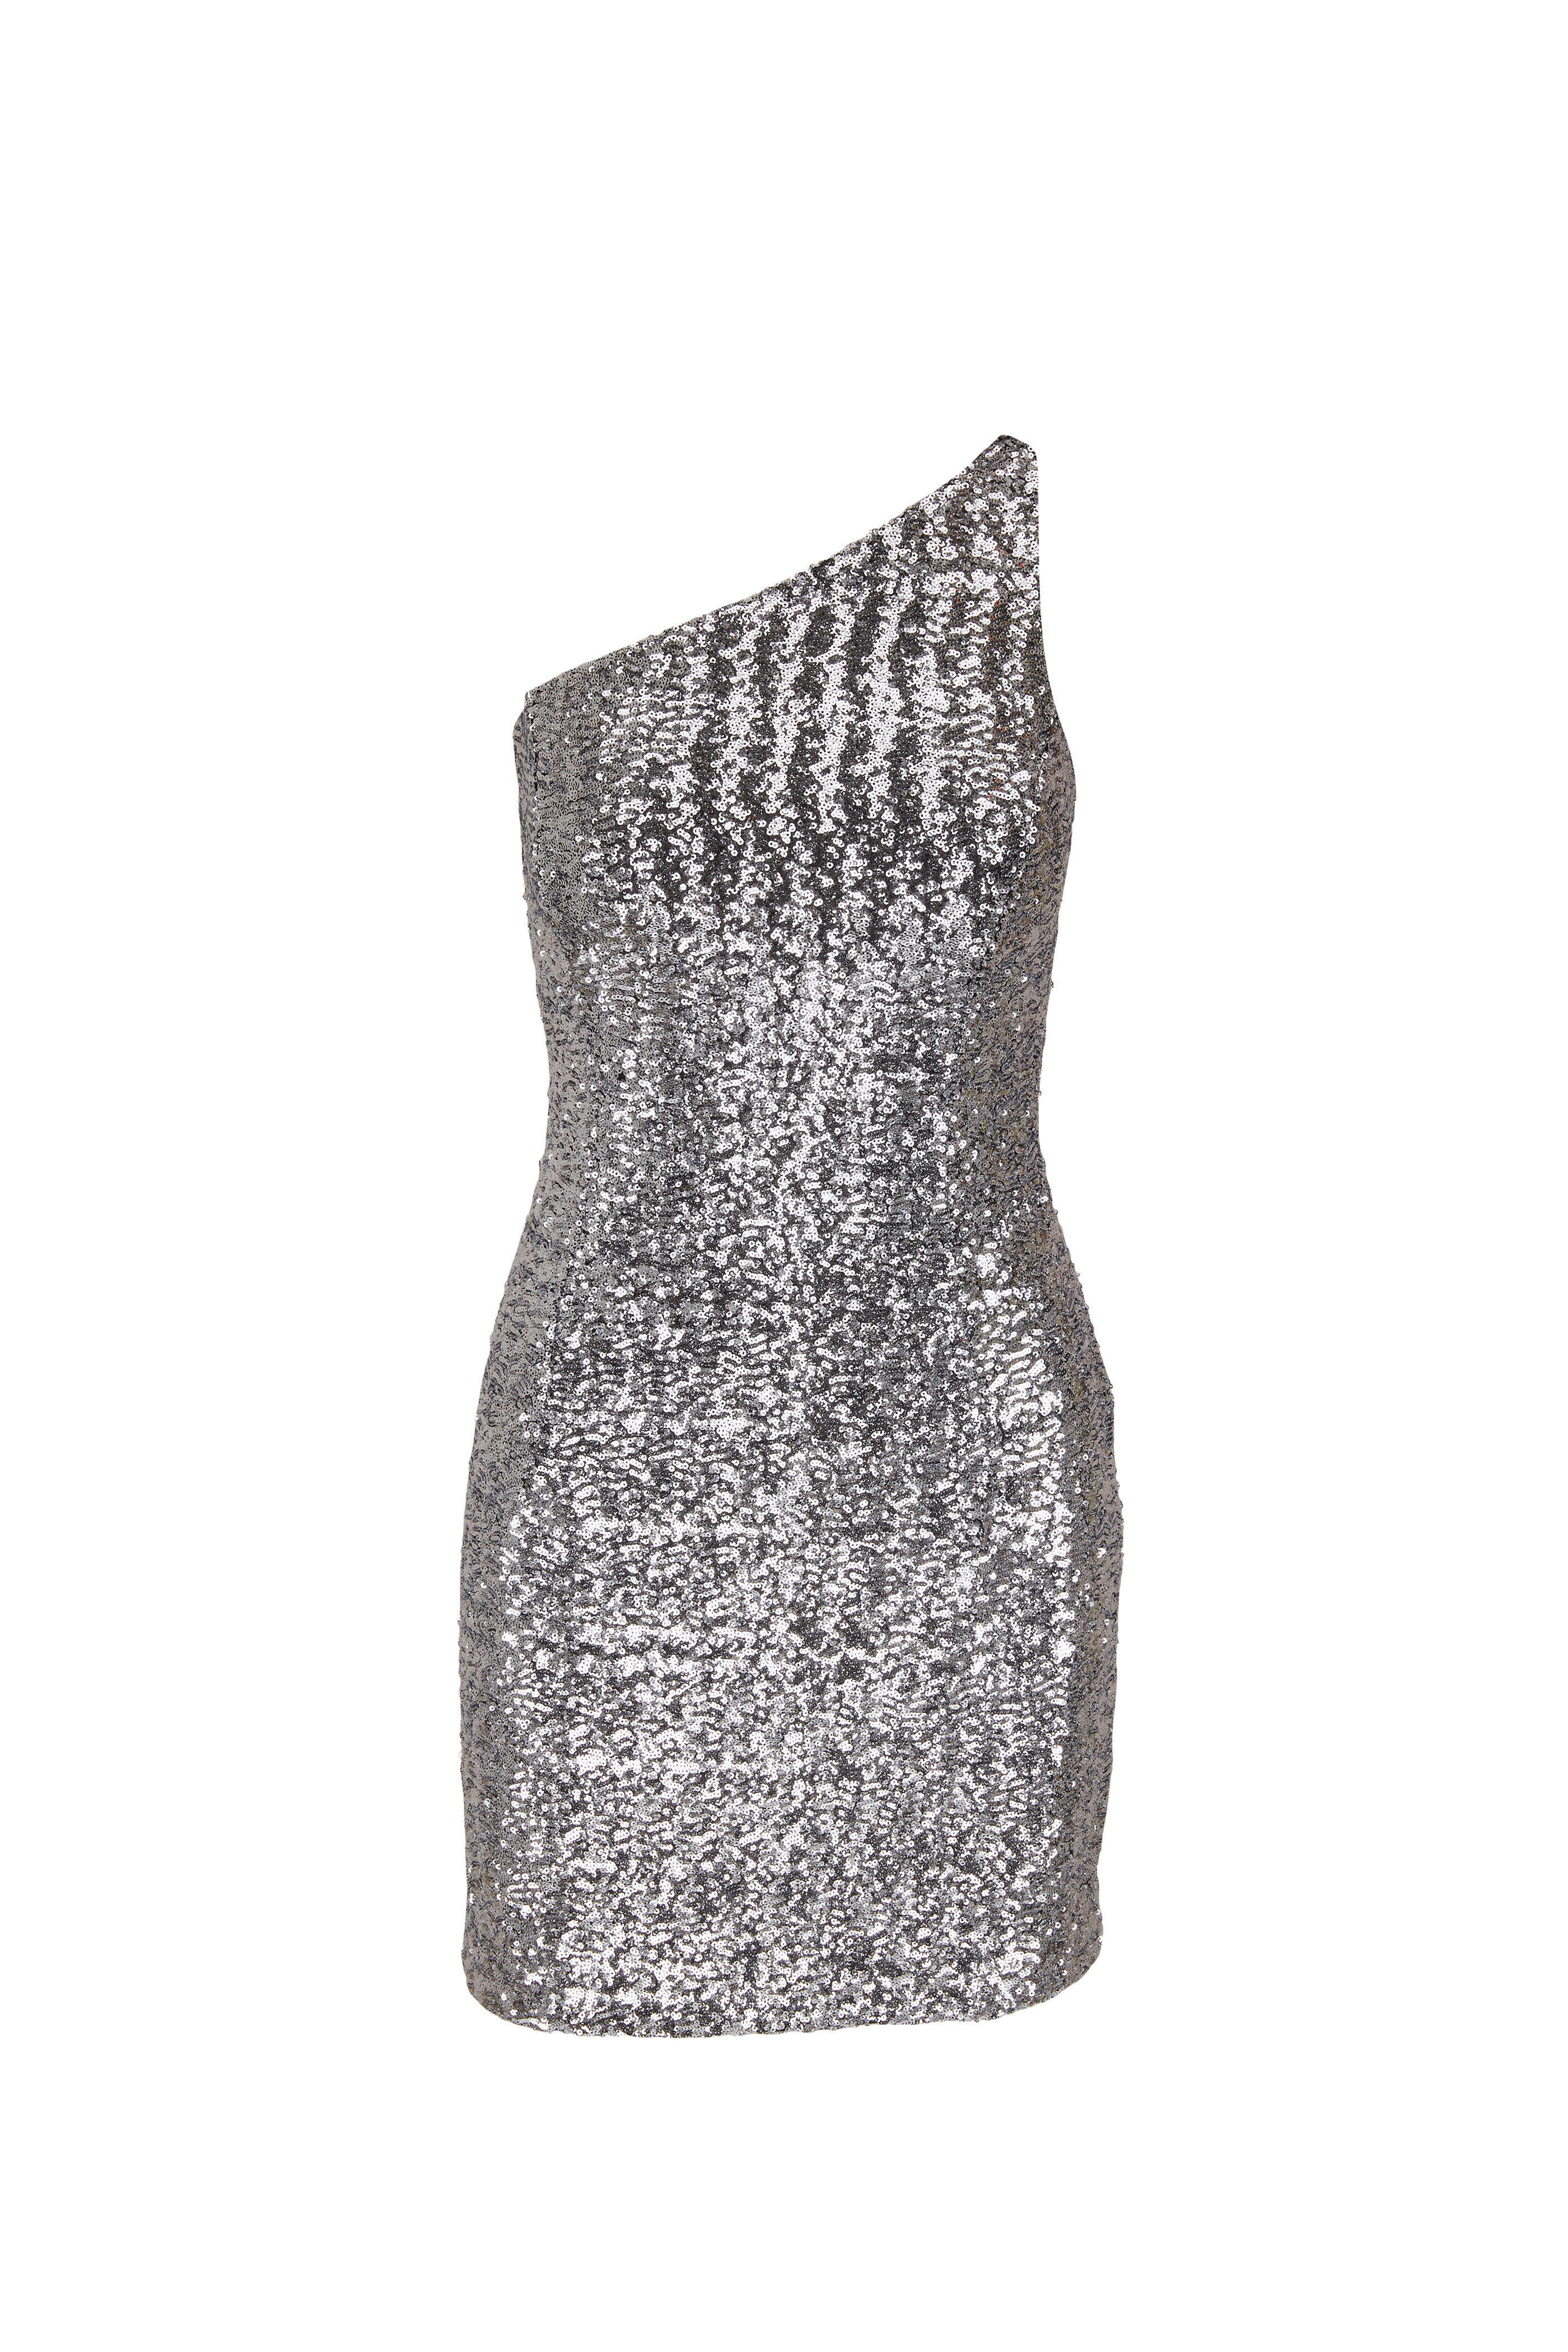 Michael Kors Collection - Silver Sequin One Shoulder Sheath Dress